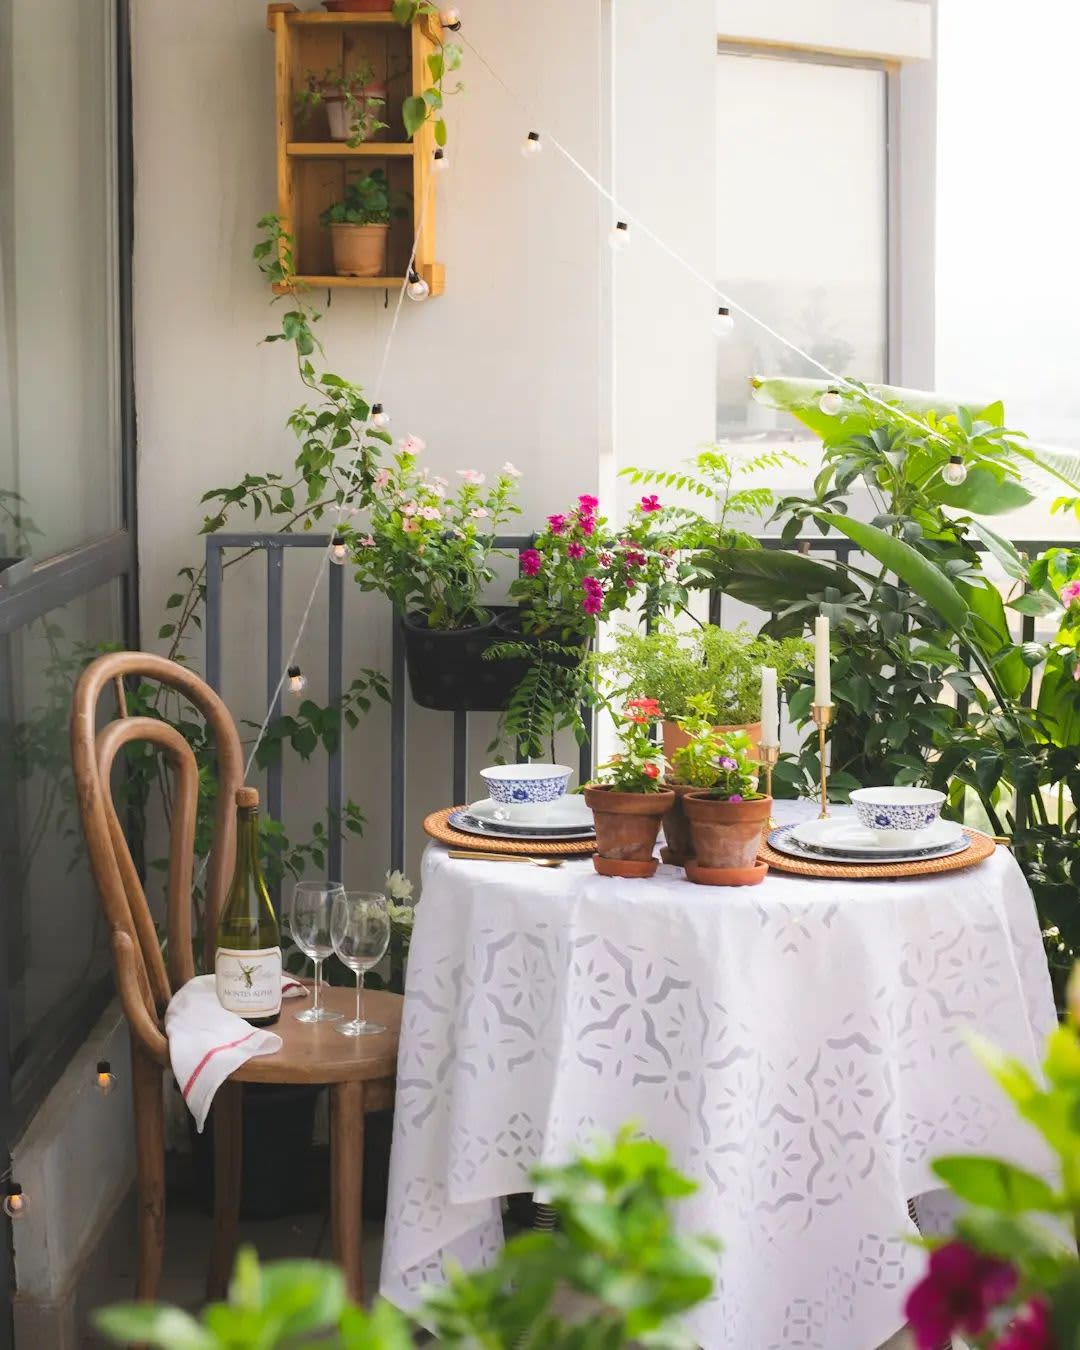 18 Balcony Garden Ideas   How to Grow Plants on a Small Balcony ...